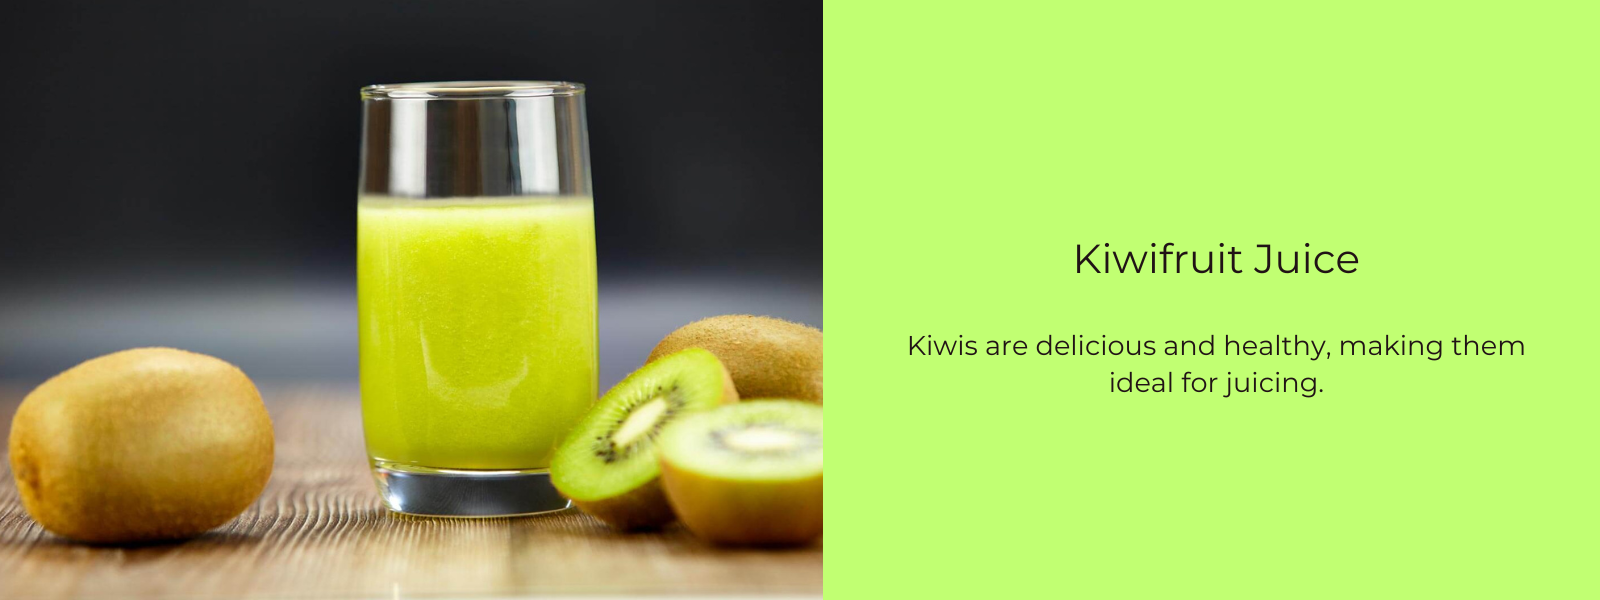 Kiwifruit Juice – Health Benefits, Uses and Important Facts